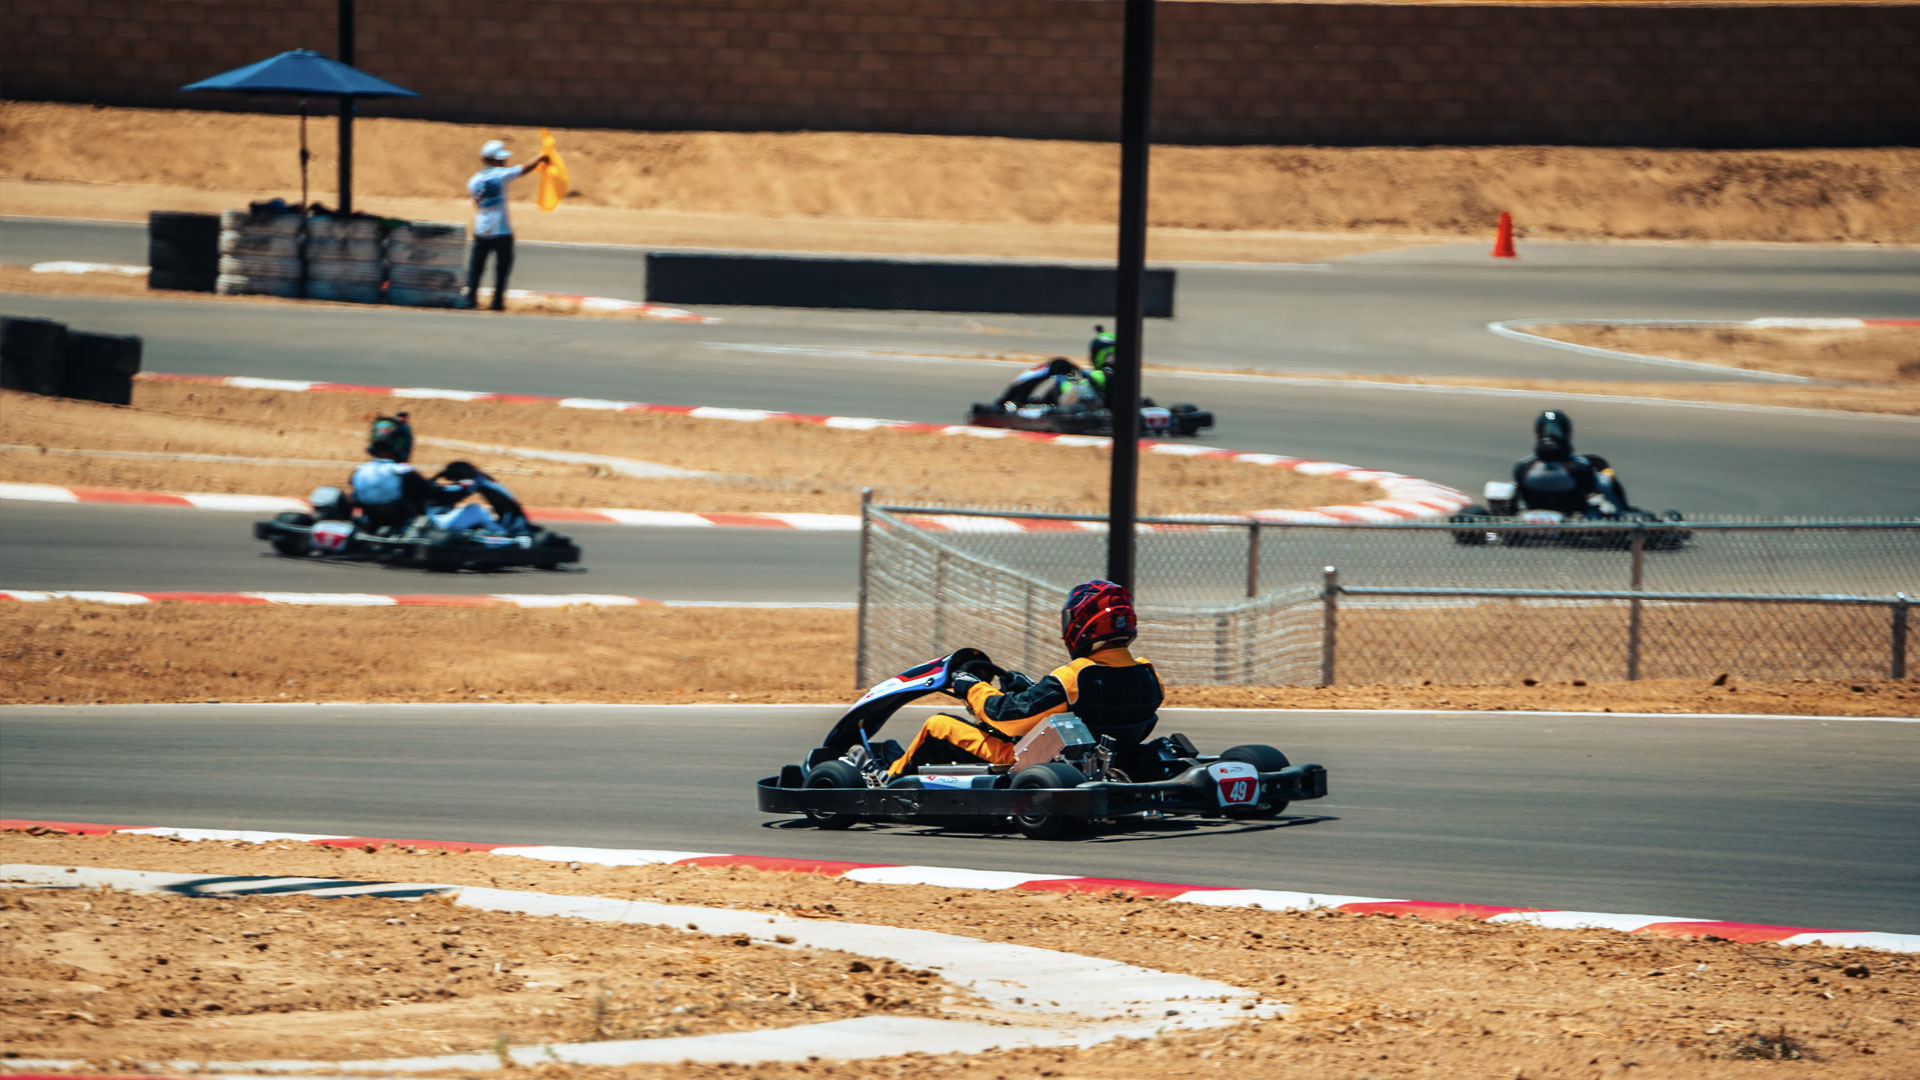 karts racing through the esses